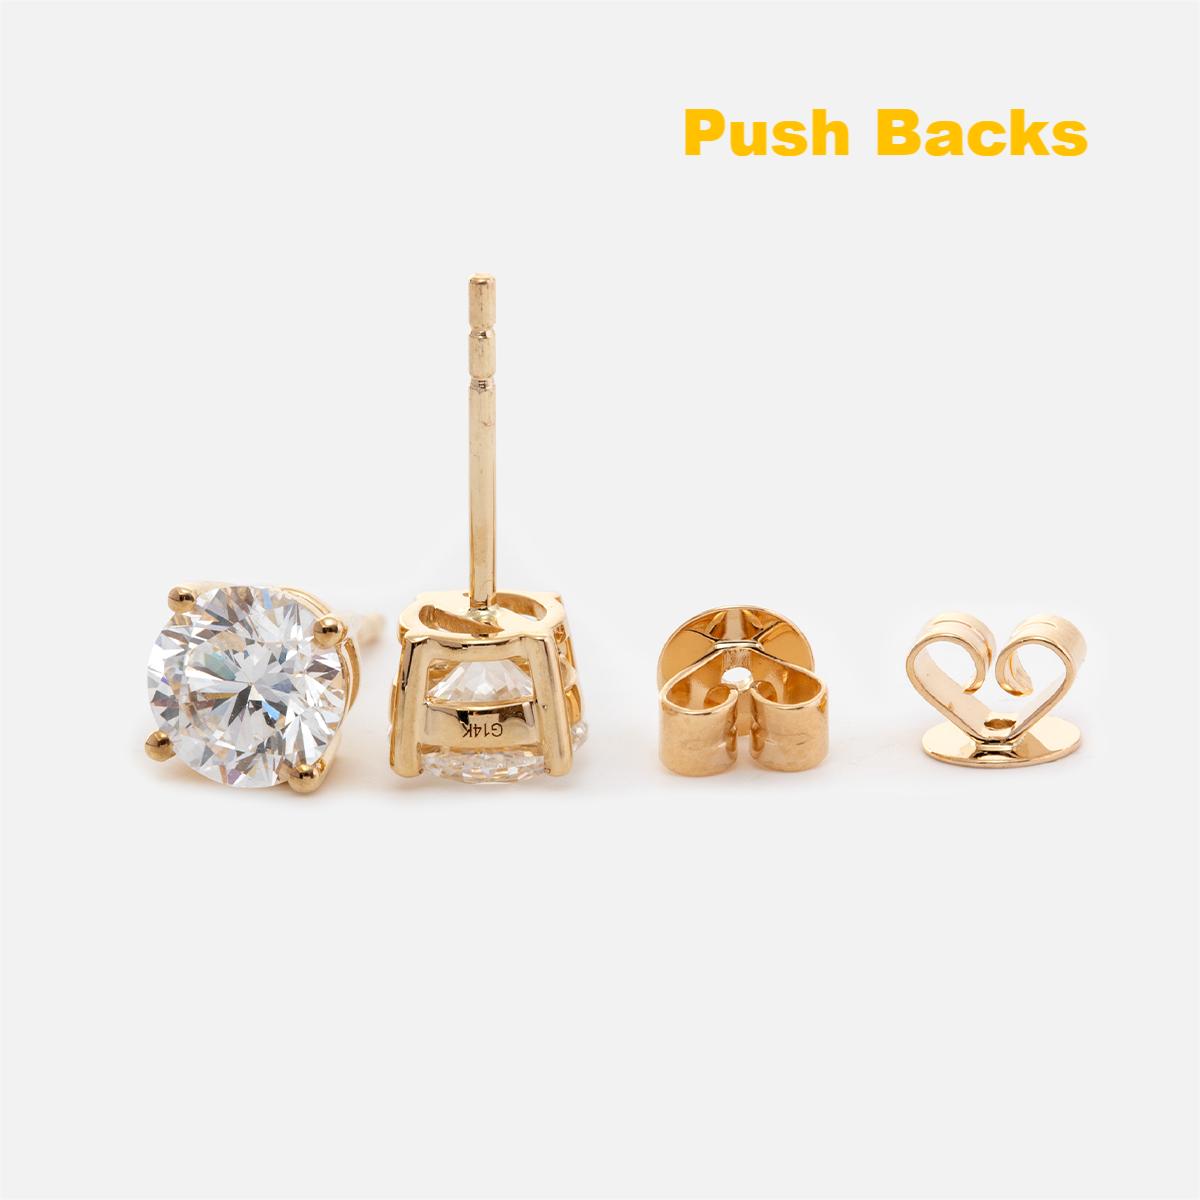 18K Yellow Gold Round Brilliant Cut Lab Diamond Hexagon Bezel Setting Stud Earrings